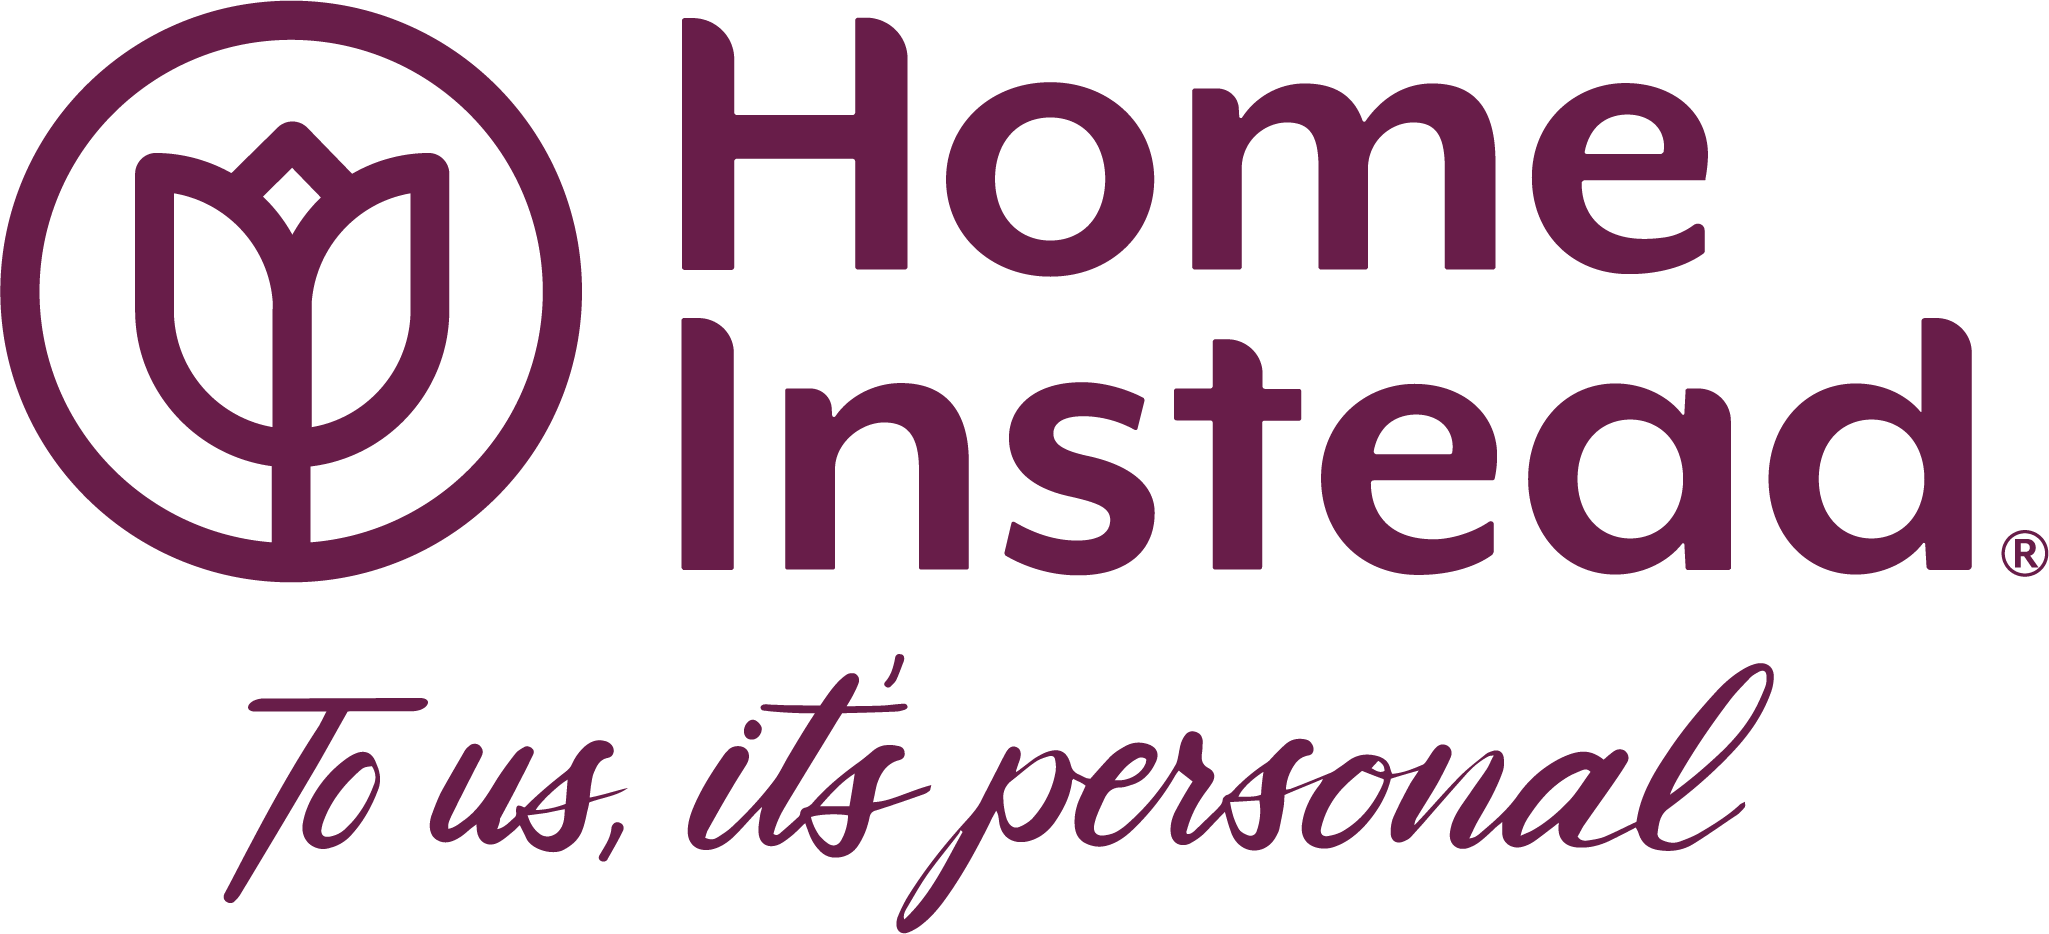 Home Instead Cleveland Company Logo